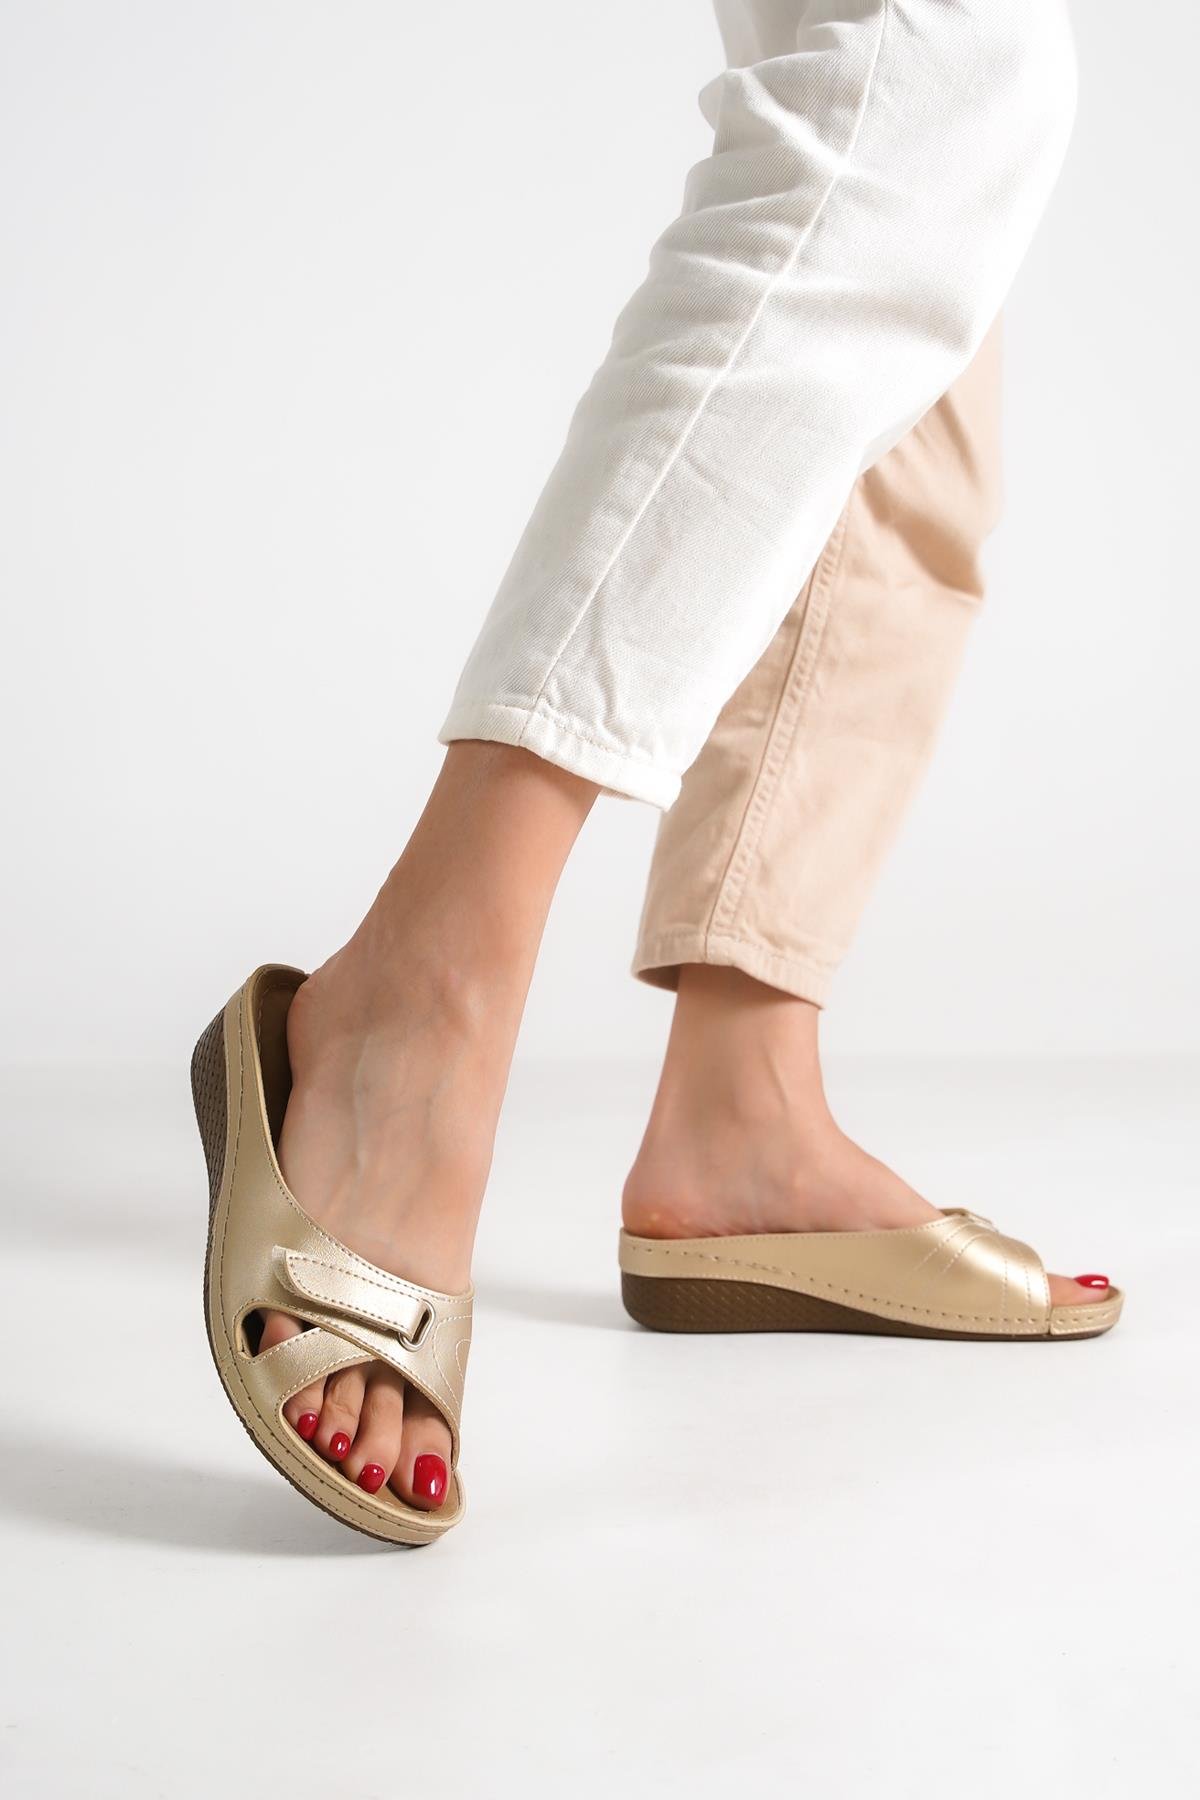 Capone Z0777 Women Gold Slide Comfort Anatomical Sandals 